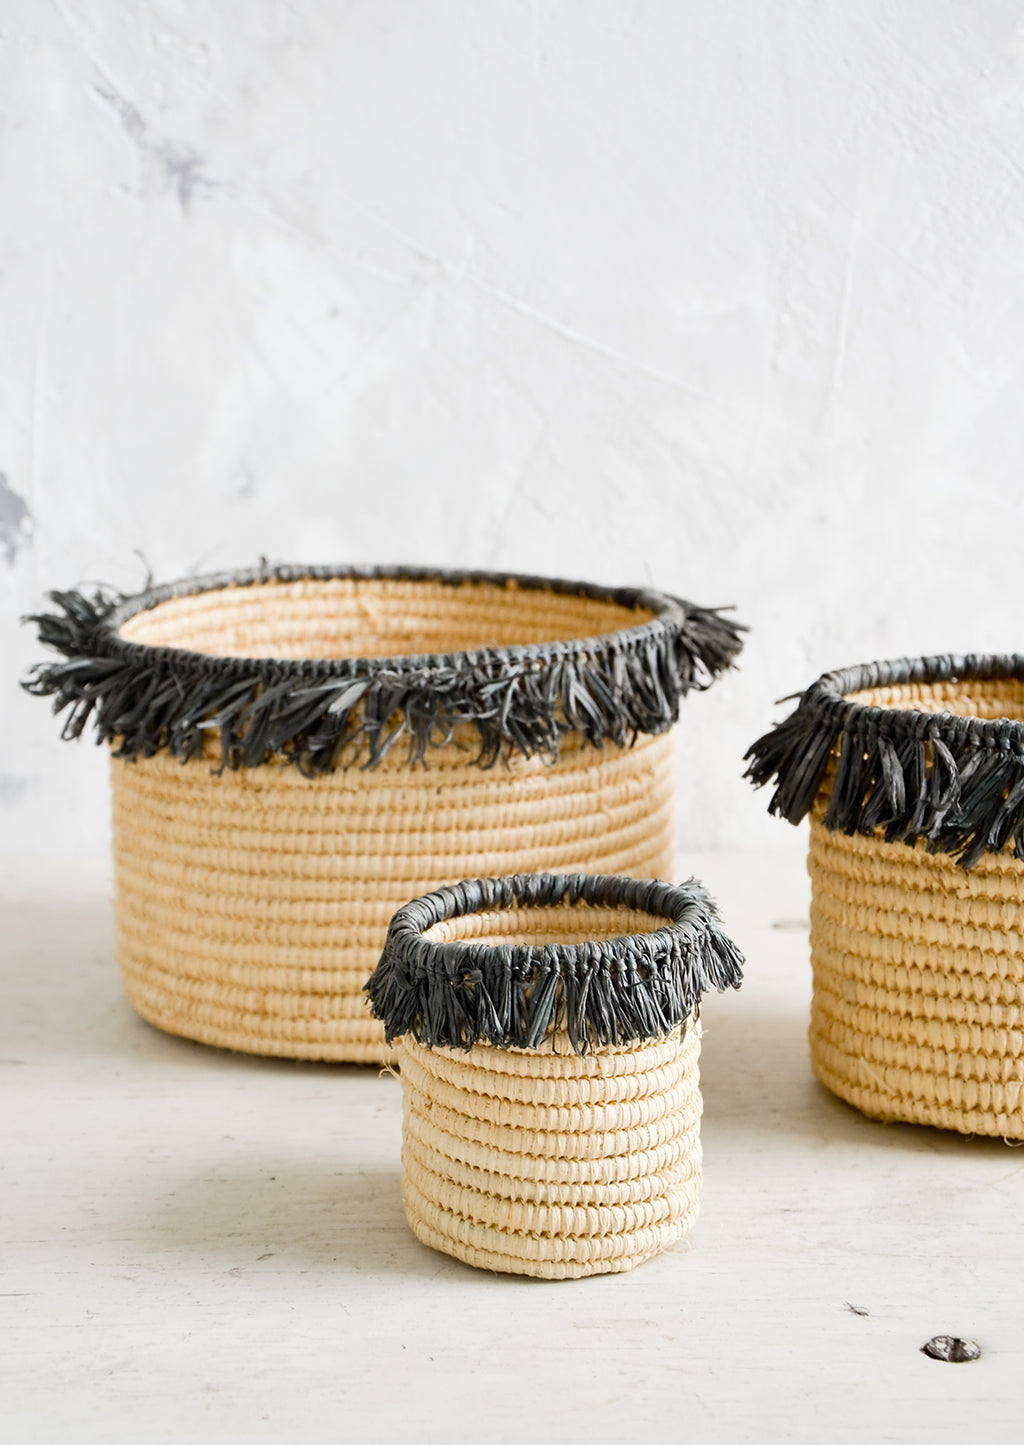 Extra Small / Natural / Grey: Round, natural raffia baskets with dark grey fringed raffia trim around top